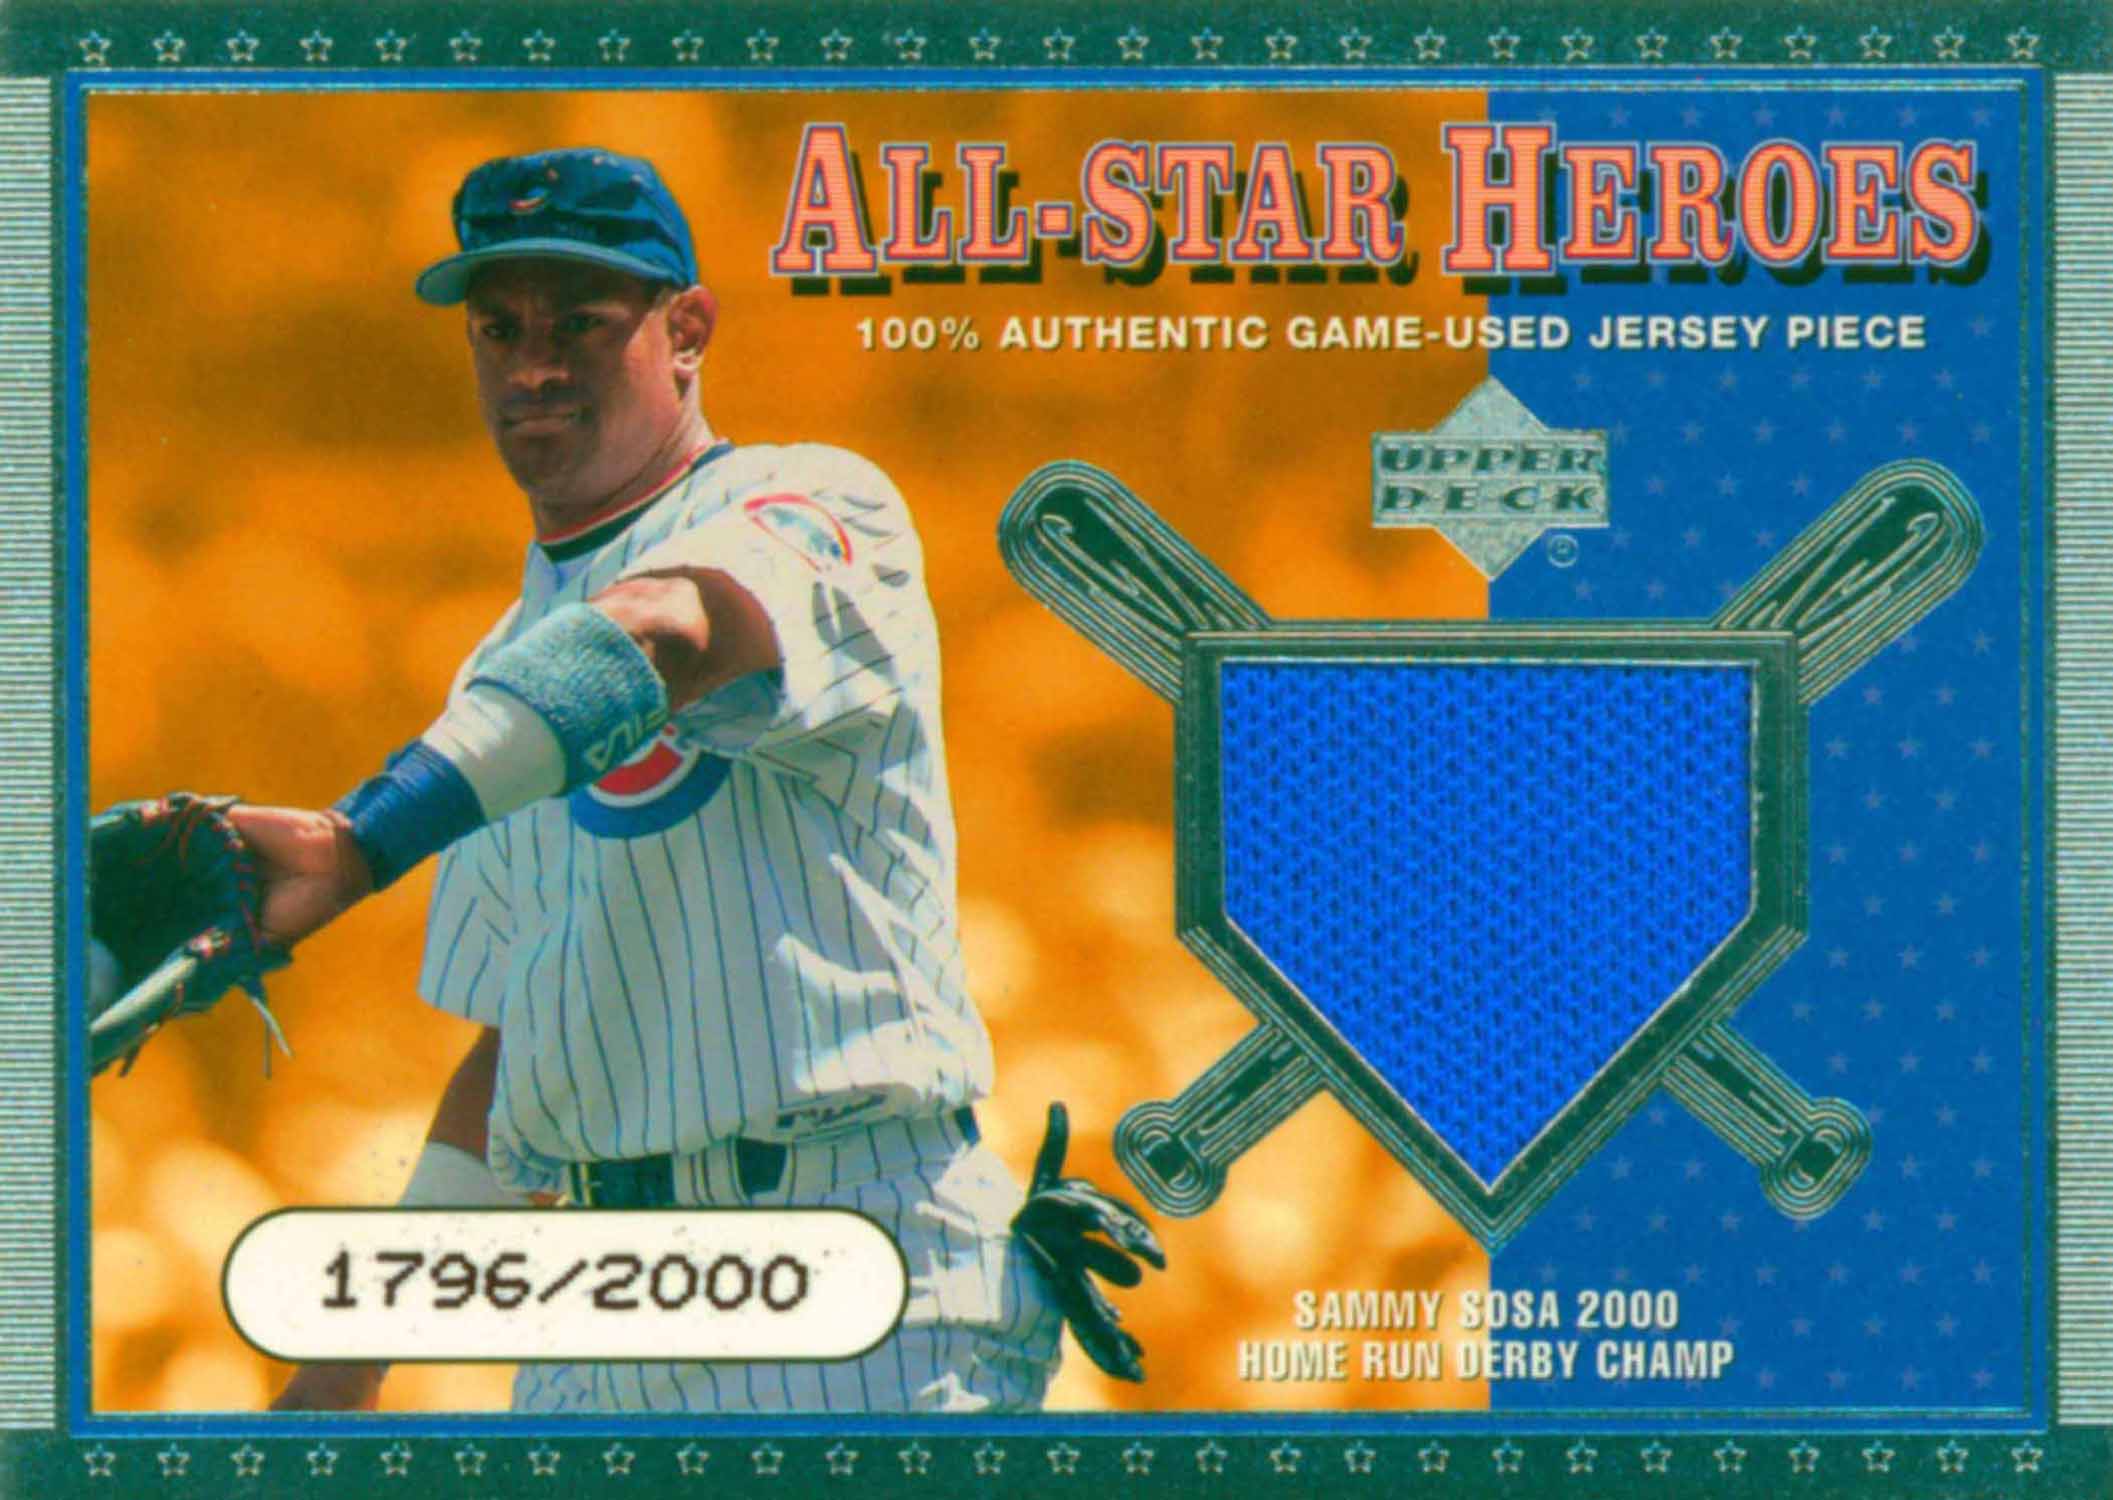 2001 Upper Deck All-Star Heroes Memorabilia Jersey